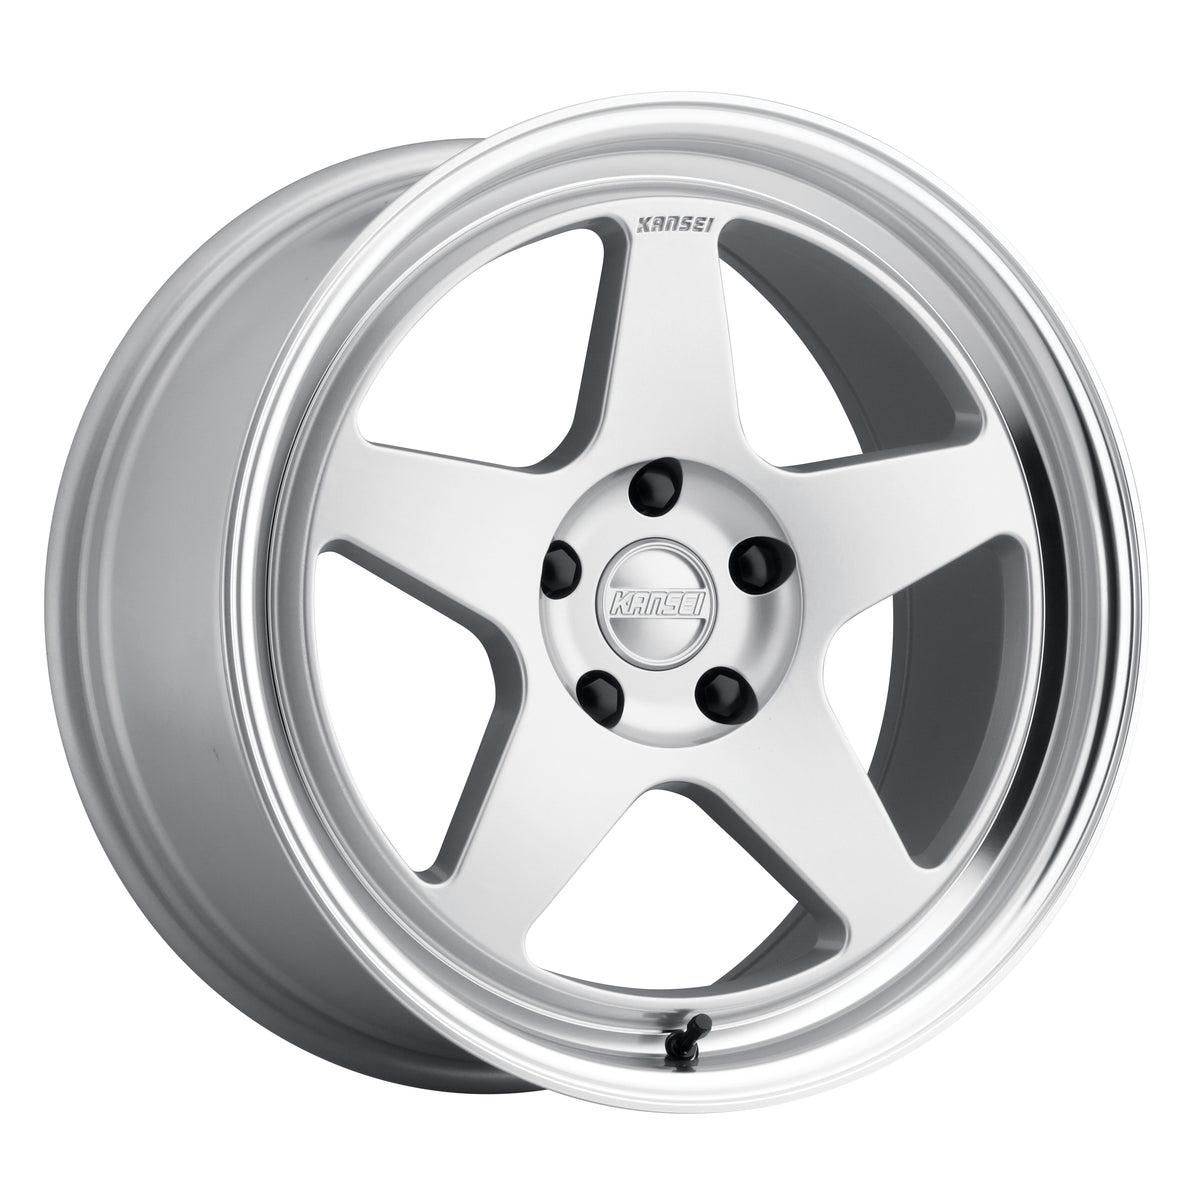 K12H KNP Wheel, Size: 19" x 10.50", Bolt Pattern: 5 x 112 mm, Backspace: 7.13" [Finish: Hyper Silver]